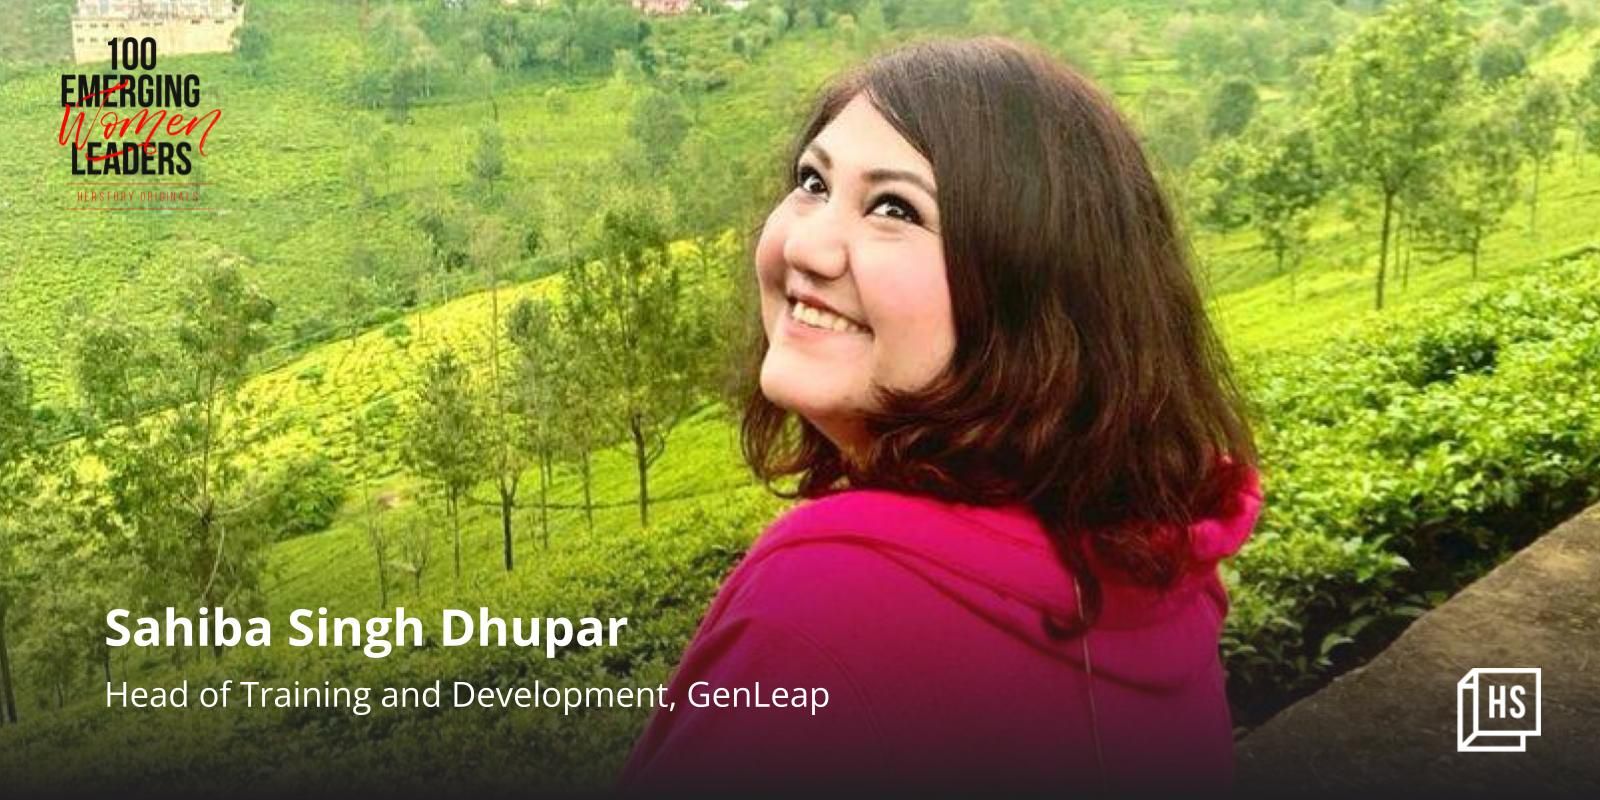 [100 Emerging Women Leaders] Sahiba Singh Dhupar wants to rewrite the way we see self-positivity